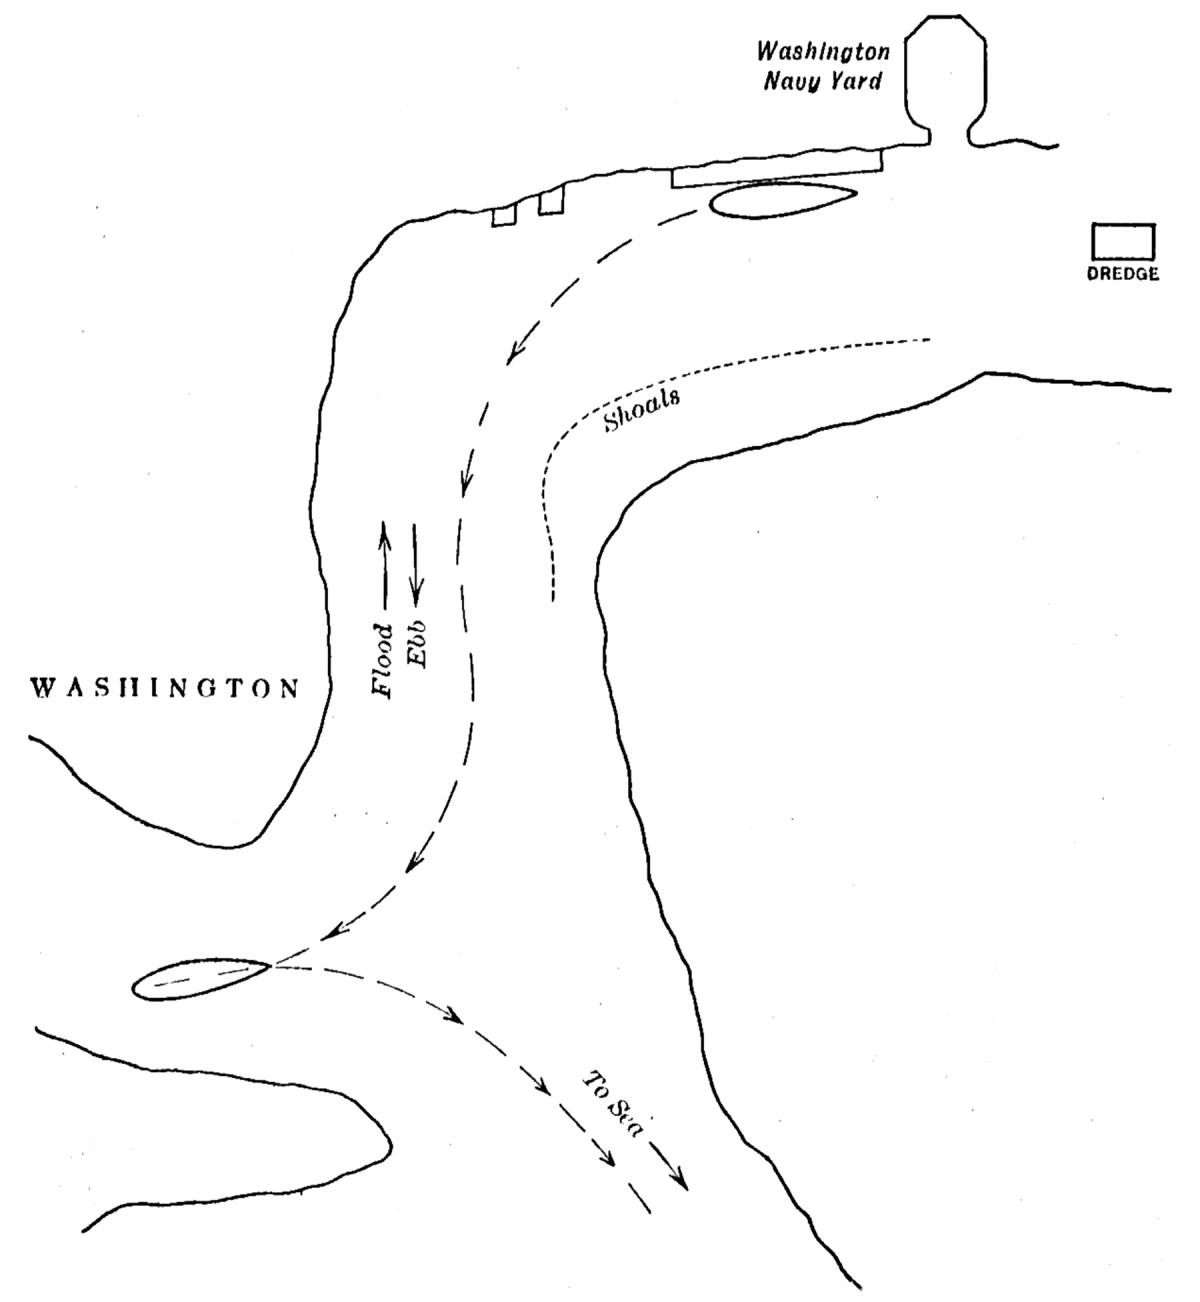 Diagram of Potomac and Anacostia Rivers, Showing Navy Yard.